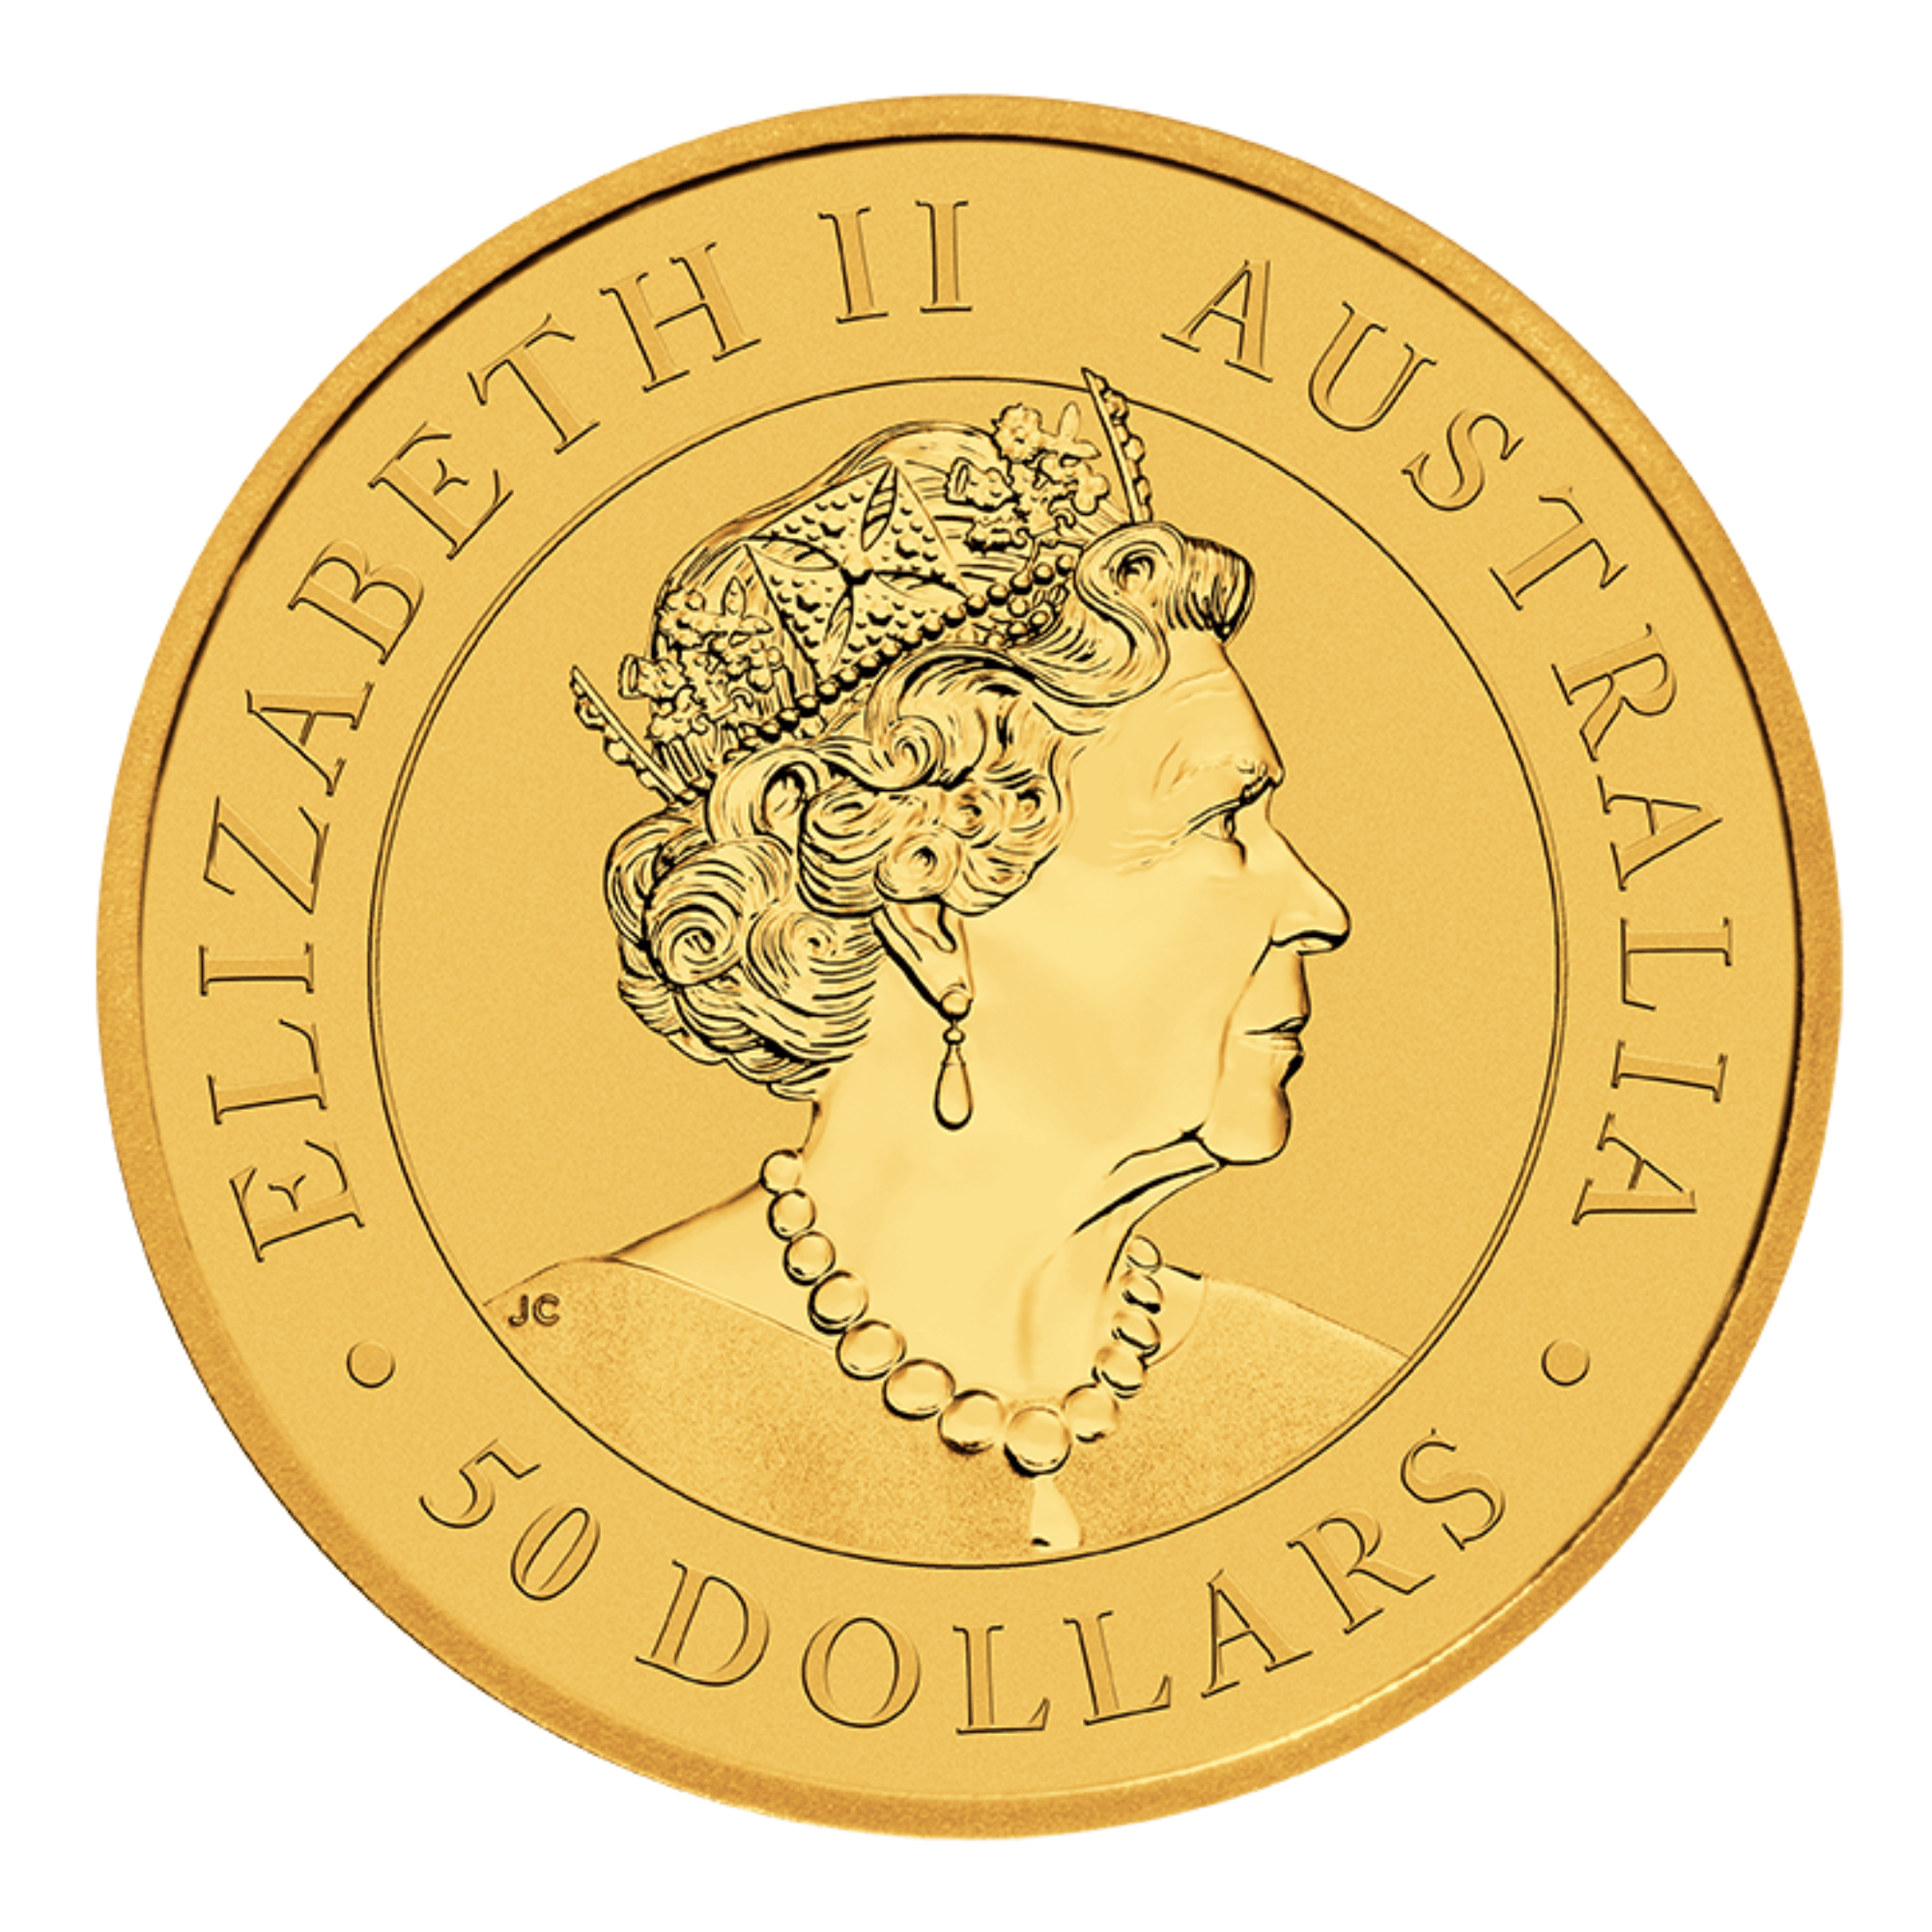 1/2oz Perth Mint Gold Kangaroo Coin Random Years